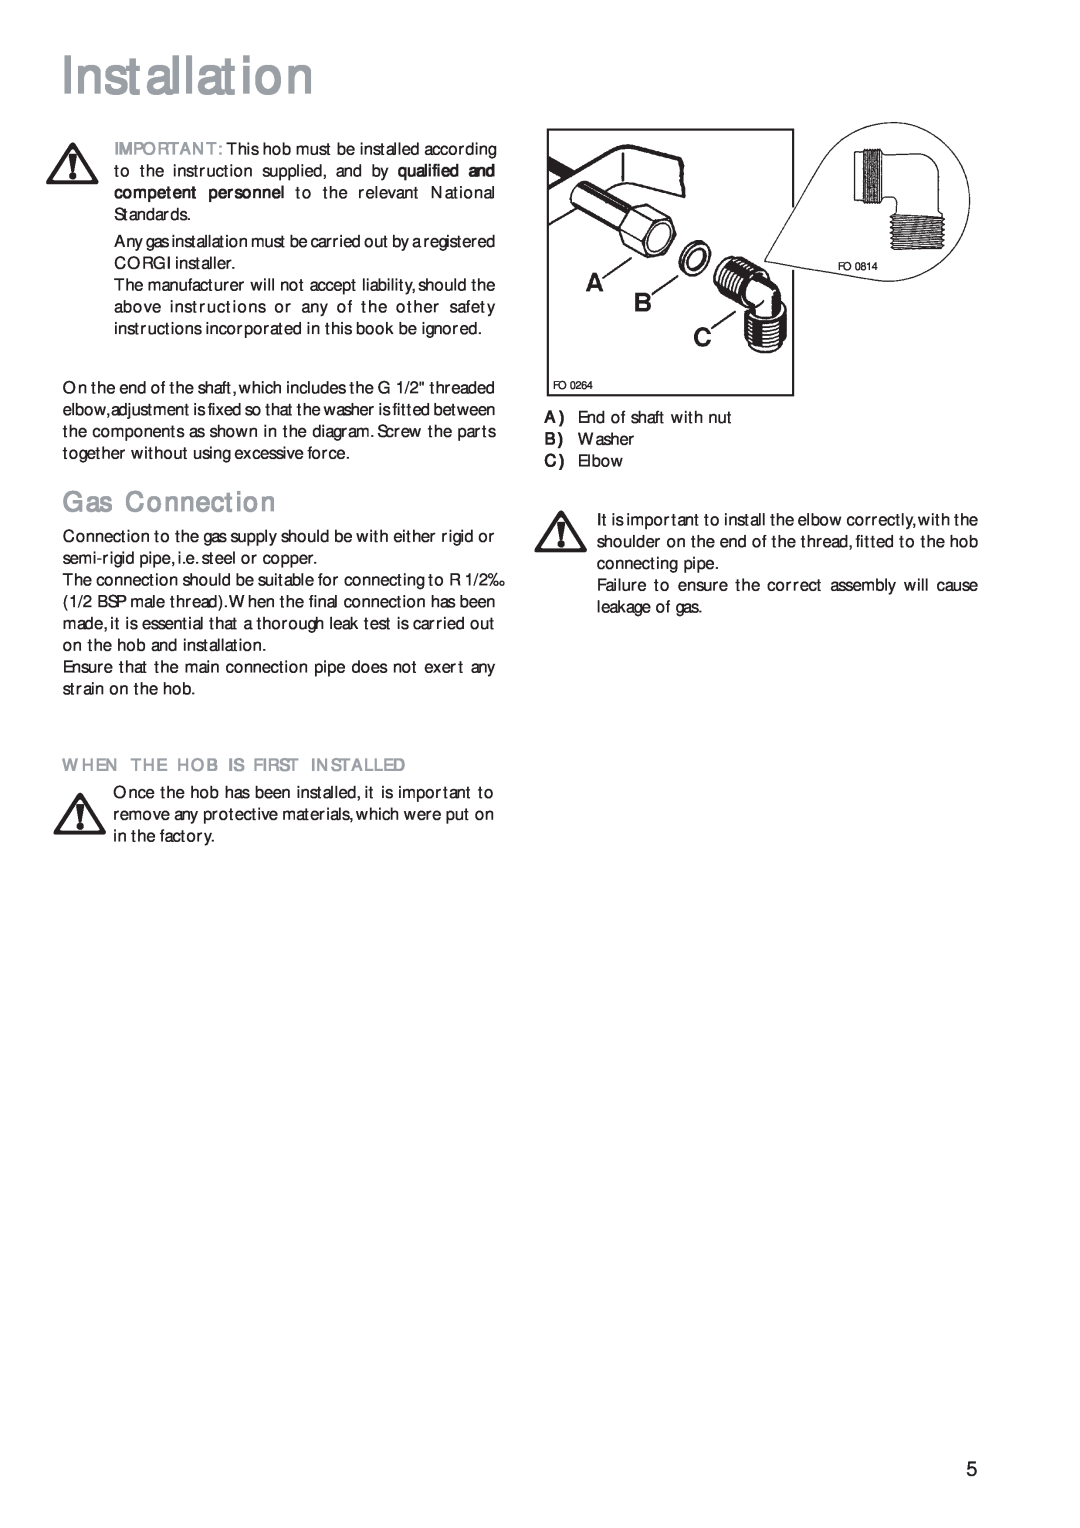 John Lewis JLBIGH601 instruction manual Installation, Gas Connection 